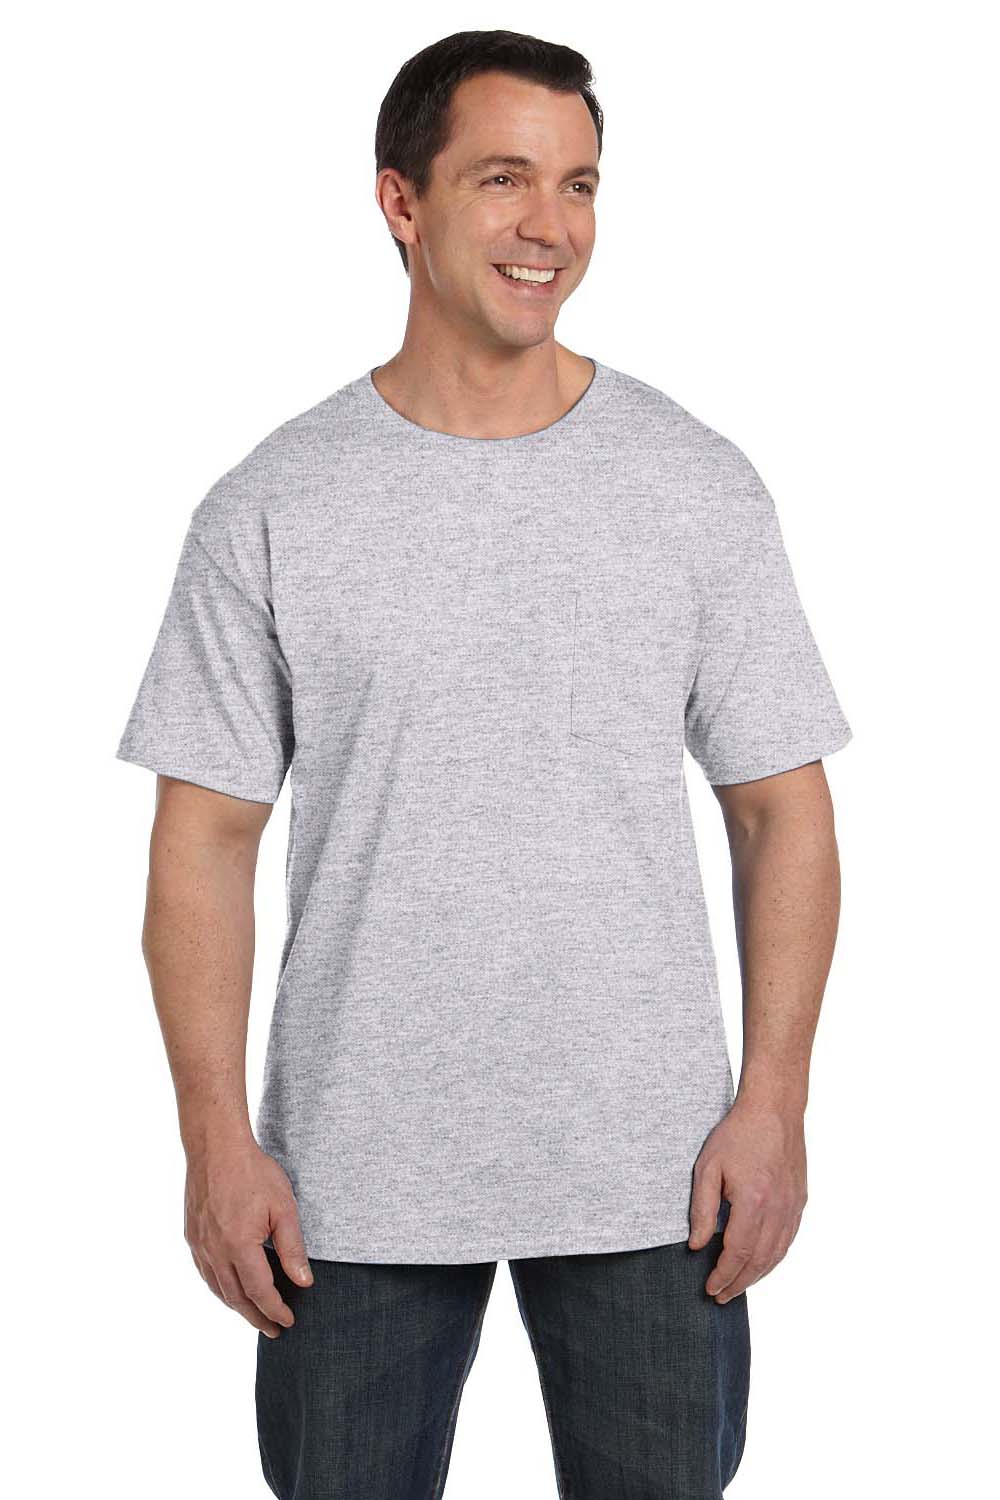 Hanes 5190P Mens Beefy-T Short Sleeve Crewneck T-Shirt w/ Pocket Ash Grey Front